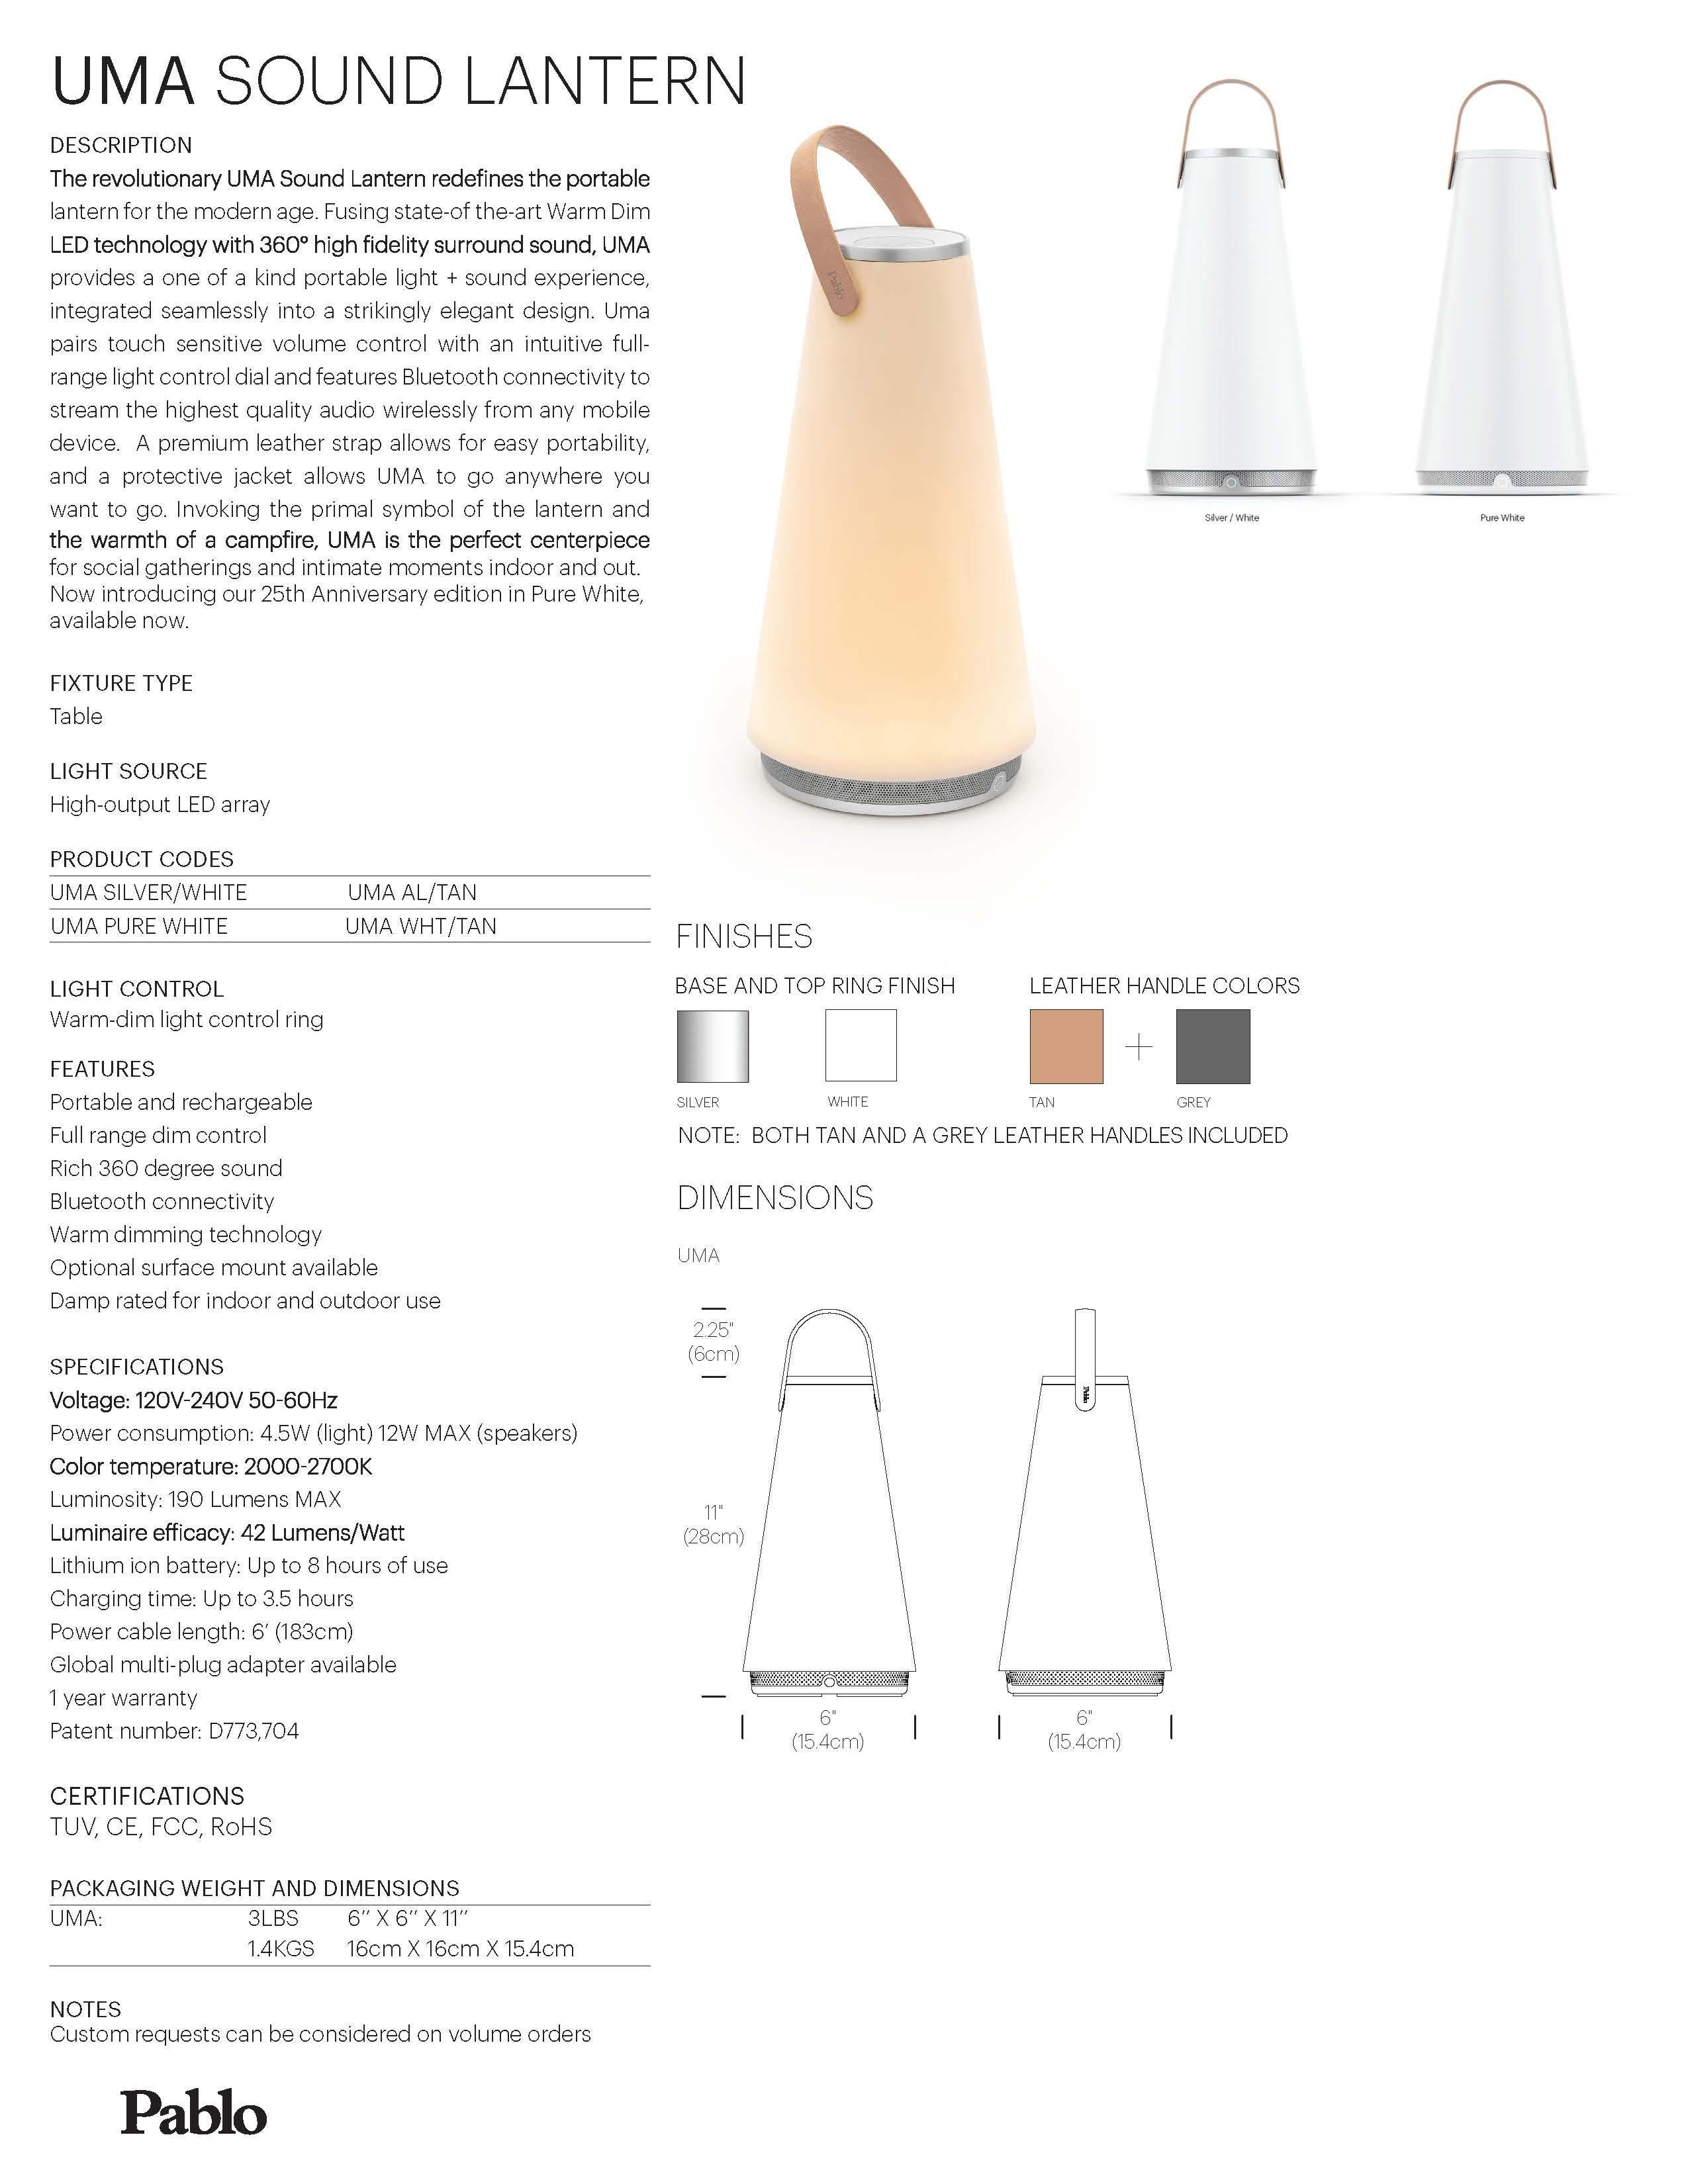 American Uma Sound Lantern in White by Pablo Designs